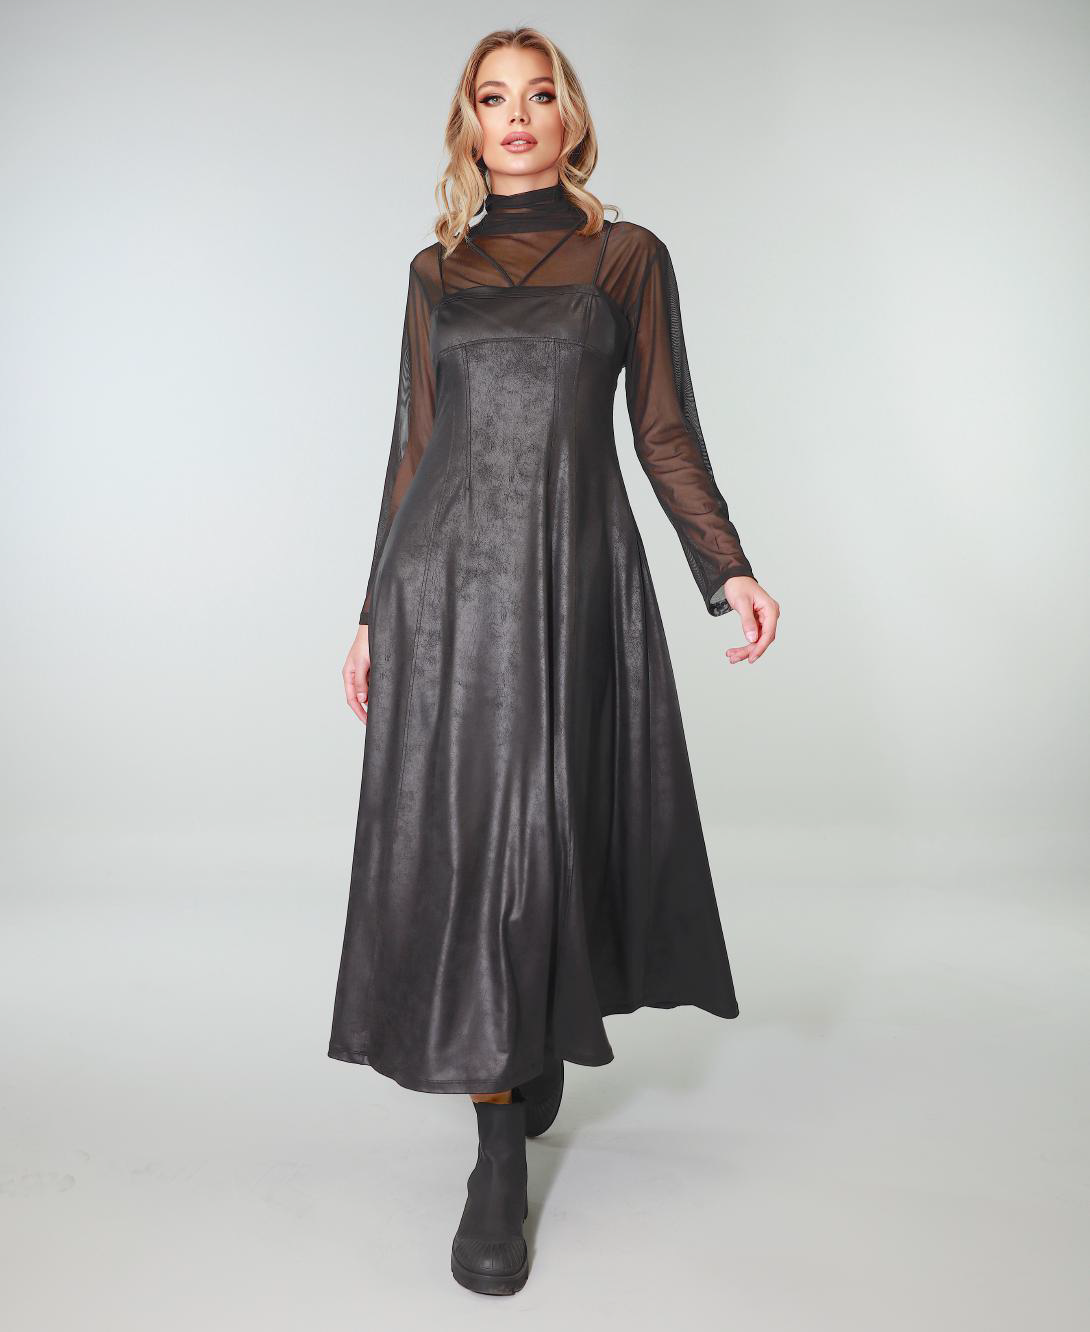 Fashion Forward Blouse Design 18000 Tulle - Black